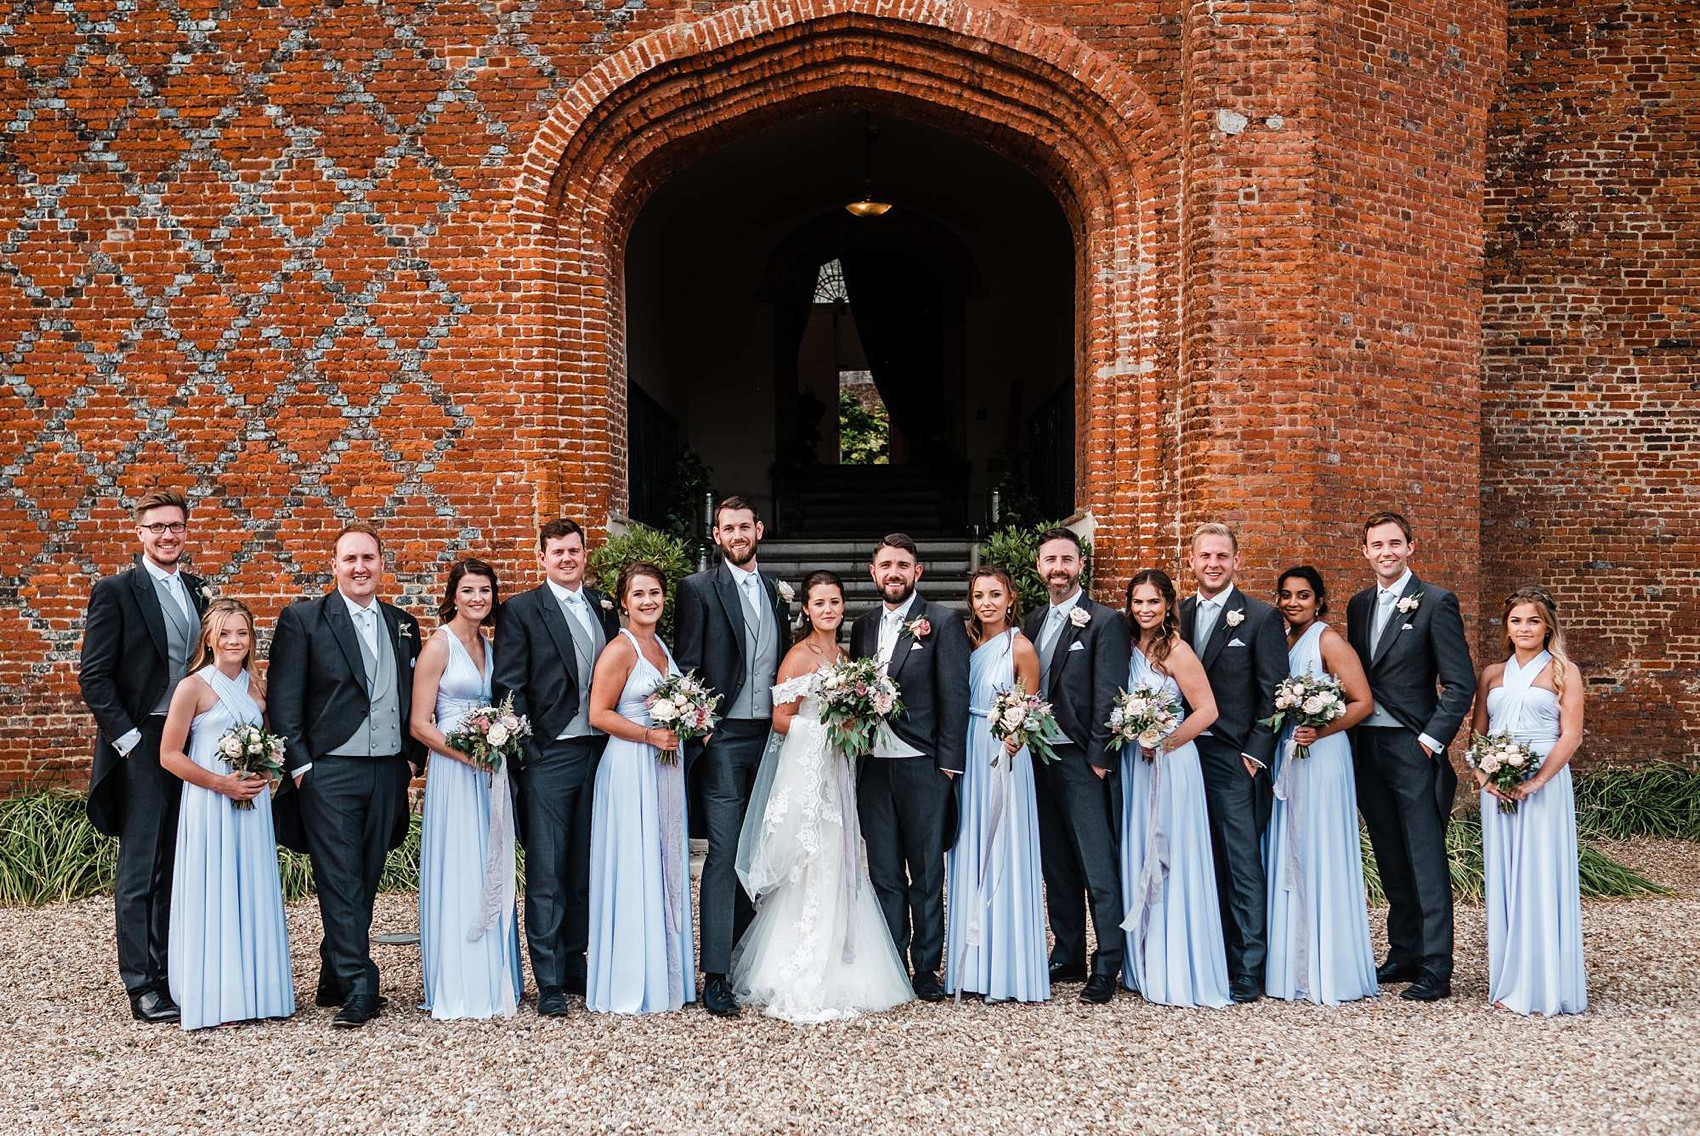  Farnham Castle wedding - A Classy + Romantic Farnham Castle Wedding with a Bride in Pronovias